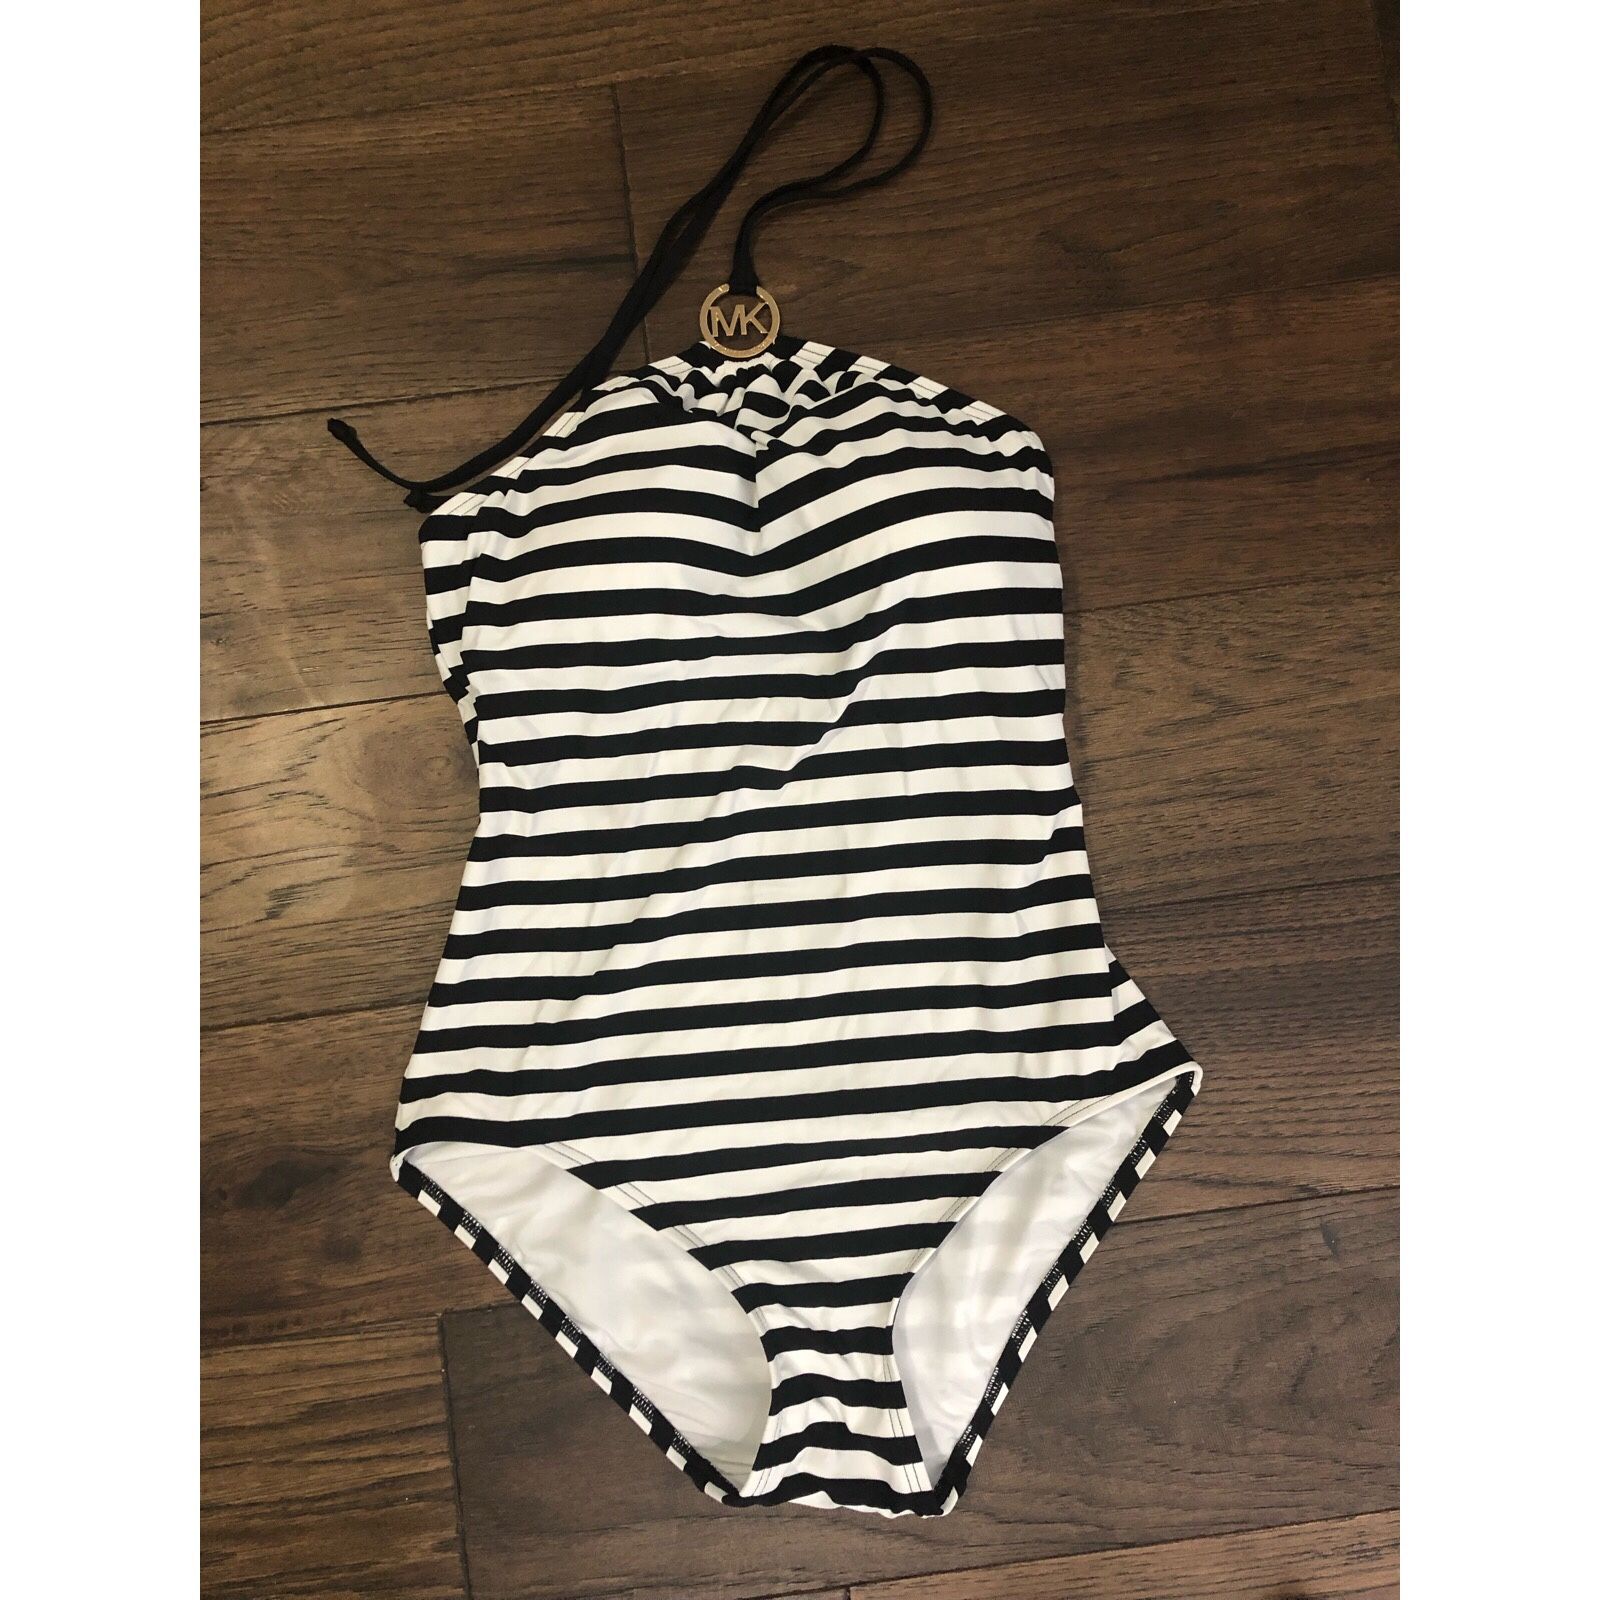 New michael Kors Black Striped 1 piece swim suit Sz 10